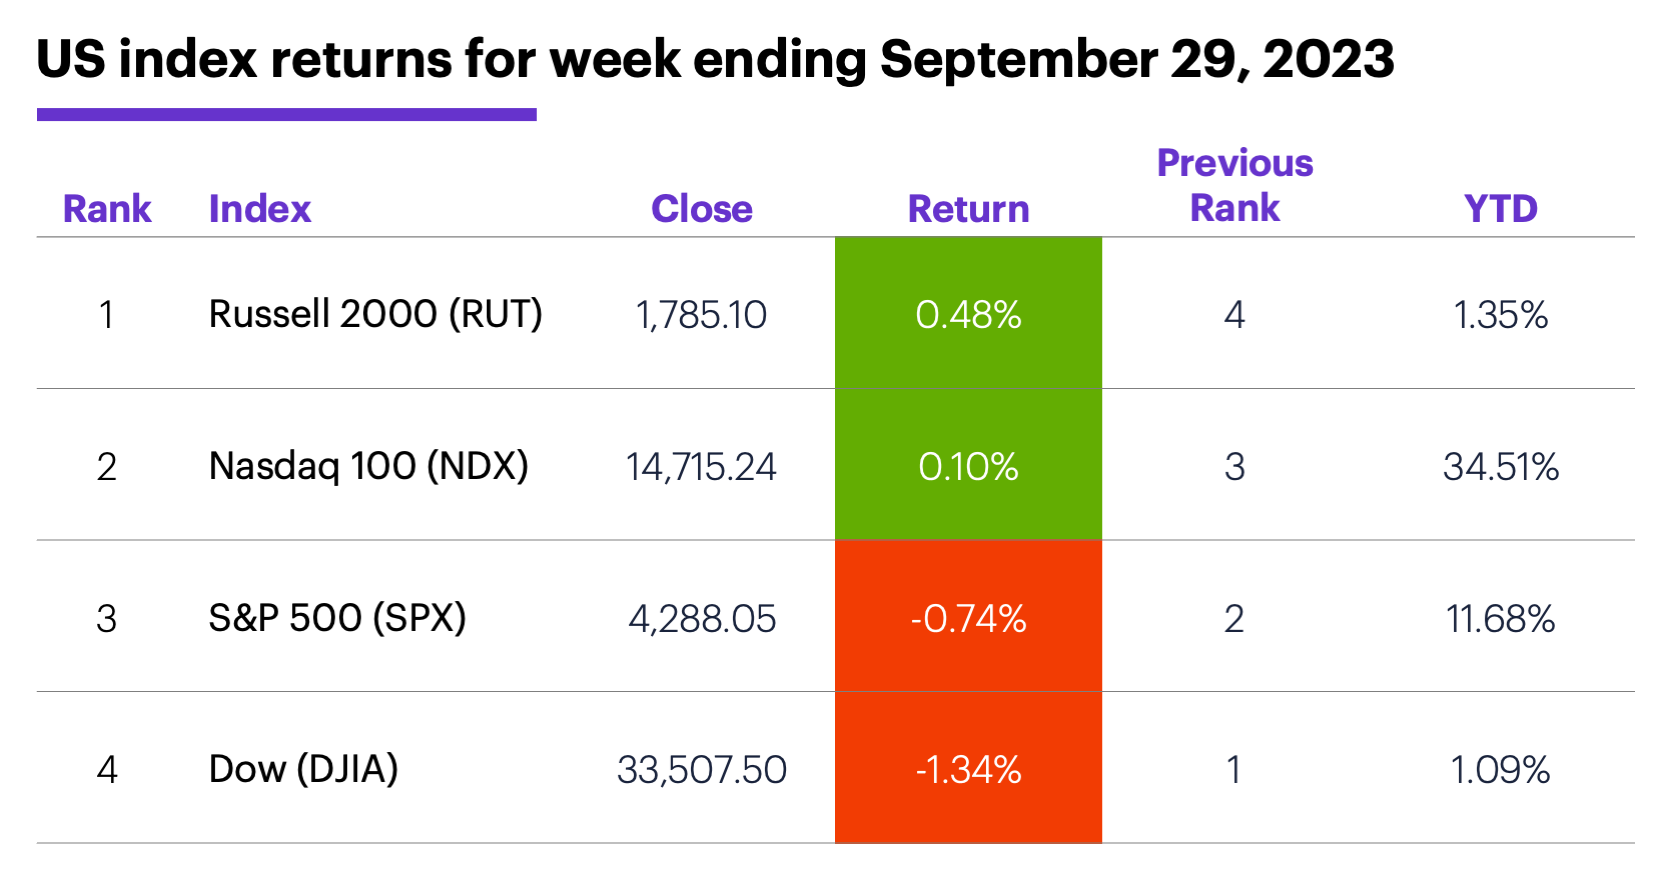 US stock index performance for week ending 9/29/23. S&P 500 (SPX), Nasdaq 100 (NDX), Russell 2000 (RUT), Dow Jones Industrial Average (DJIA).